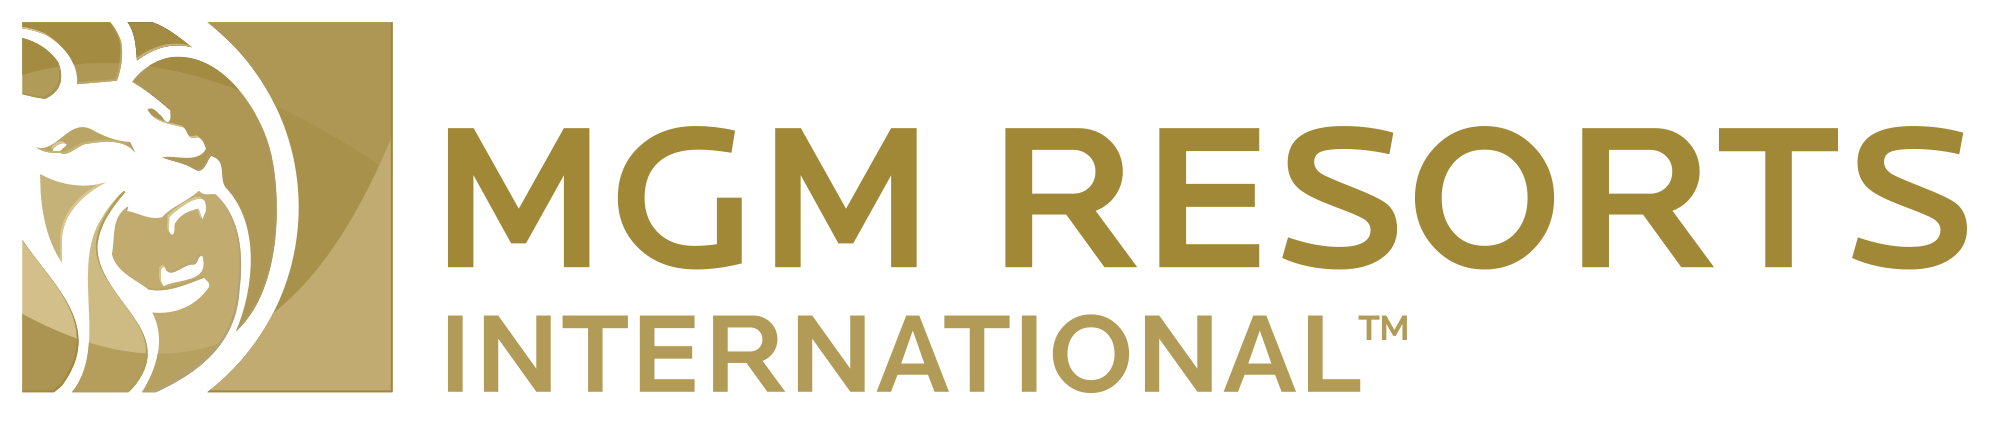 mgmresorts international logo 2000×422